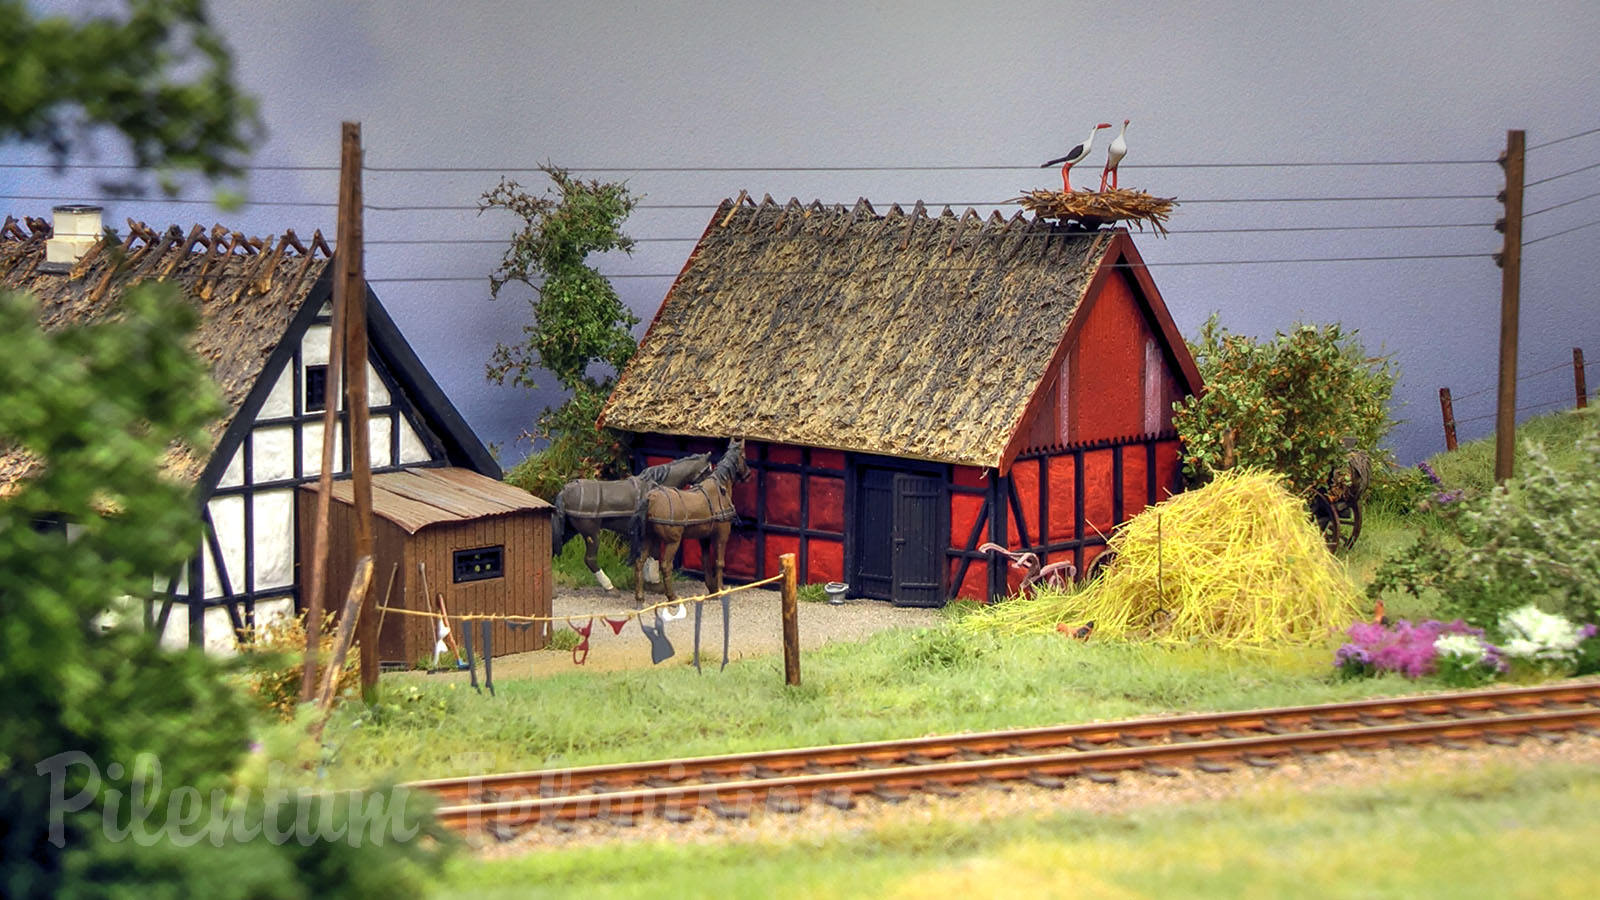 Odsherreds Modeljernbane Denmark - A colourful and detailed model railway in HO scale